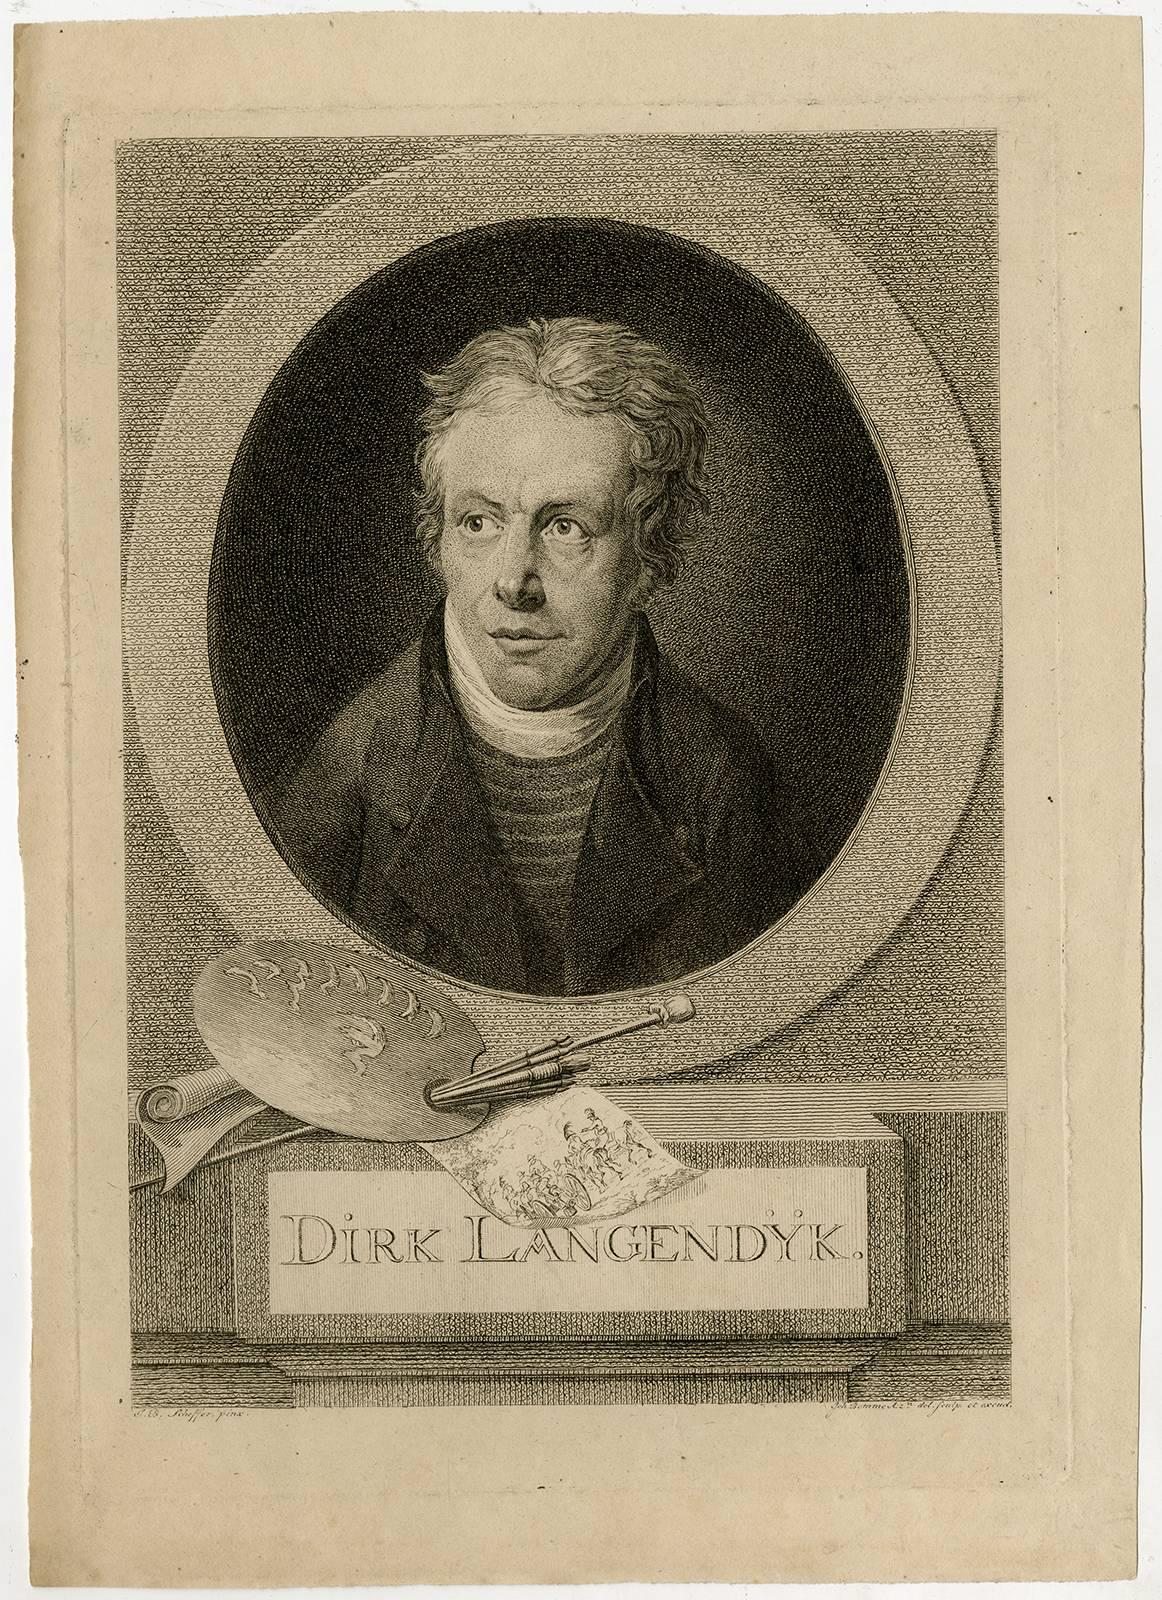 Johannes Adriaansz Bemme Portrait Print - Dirk Langendijk - Portrait of the painter Dirk Langendijk.